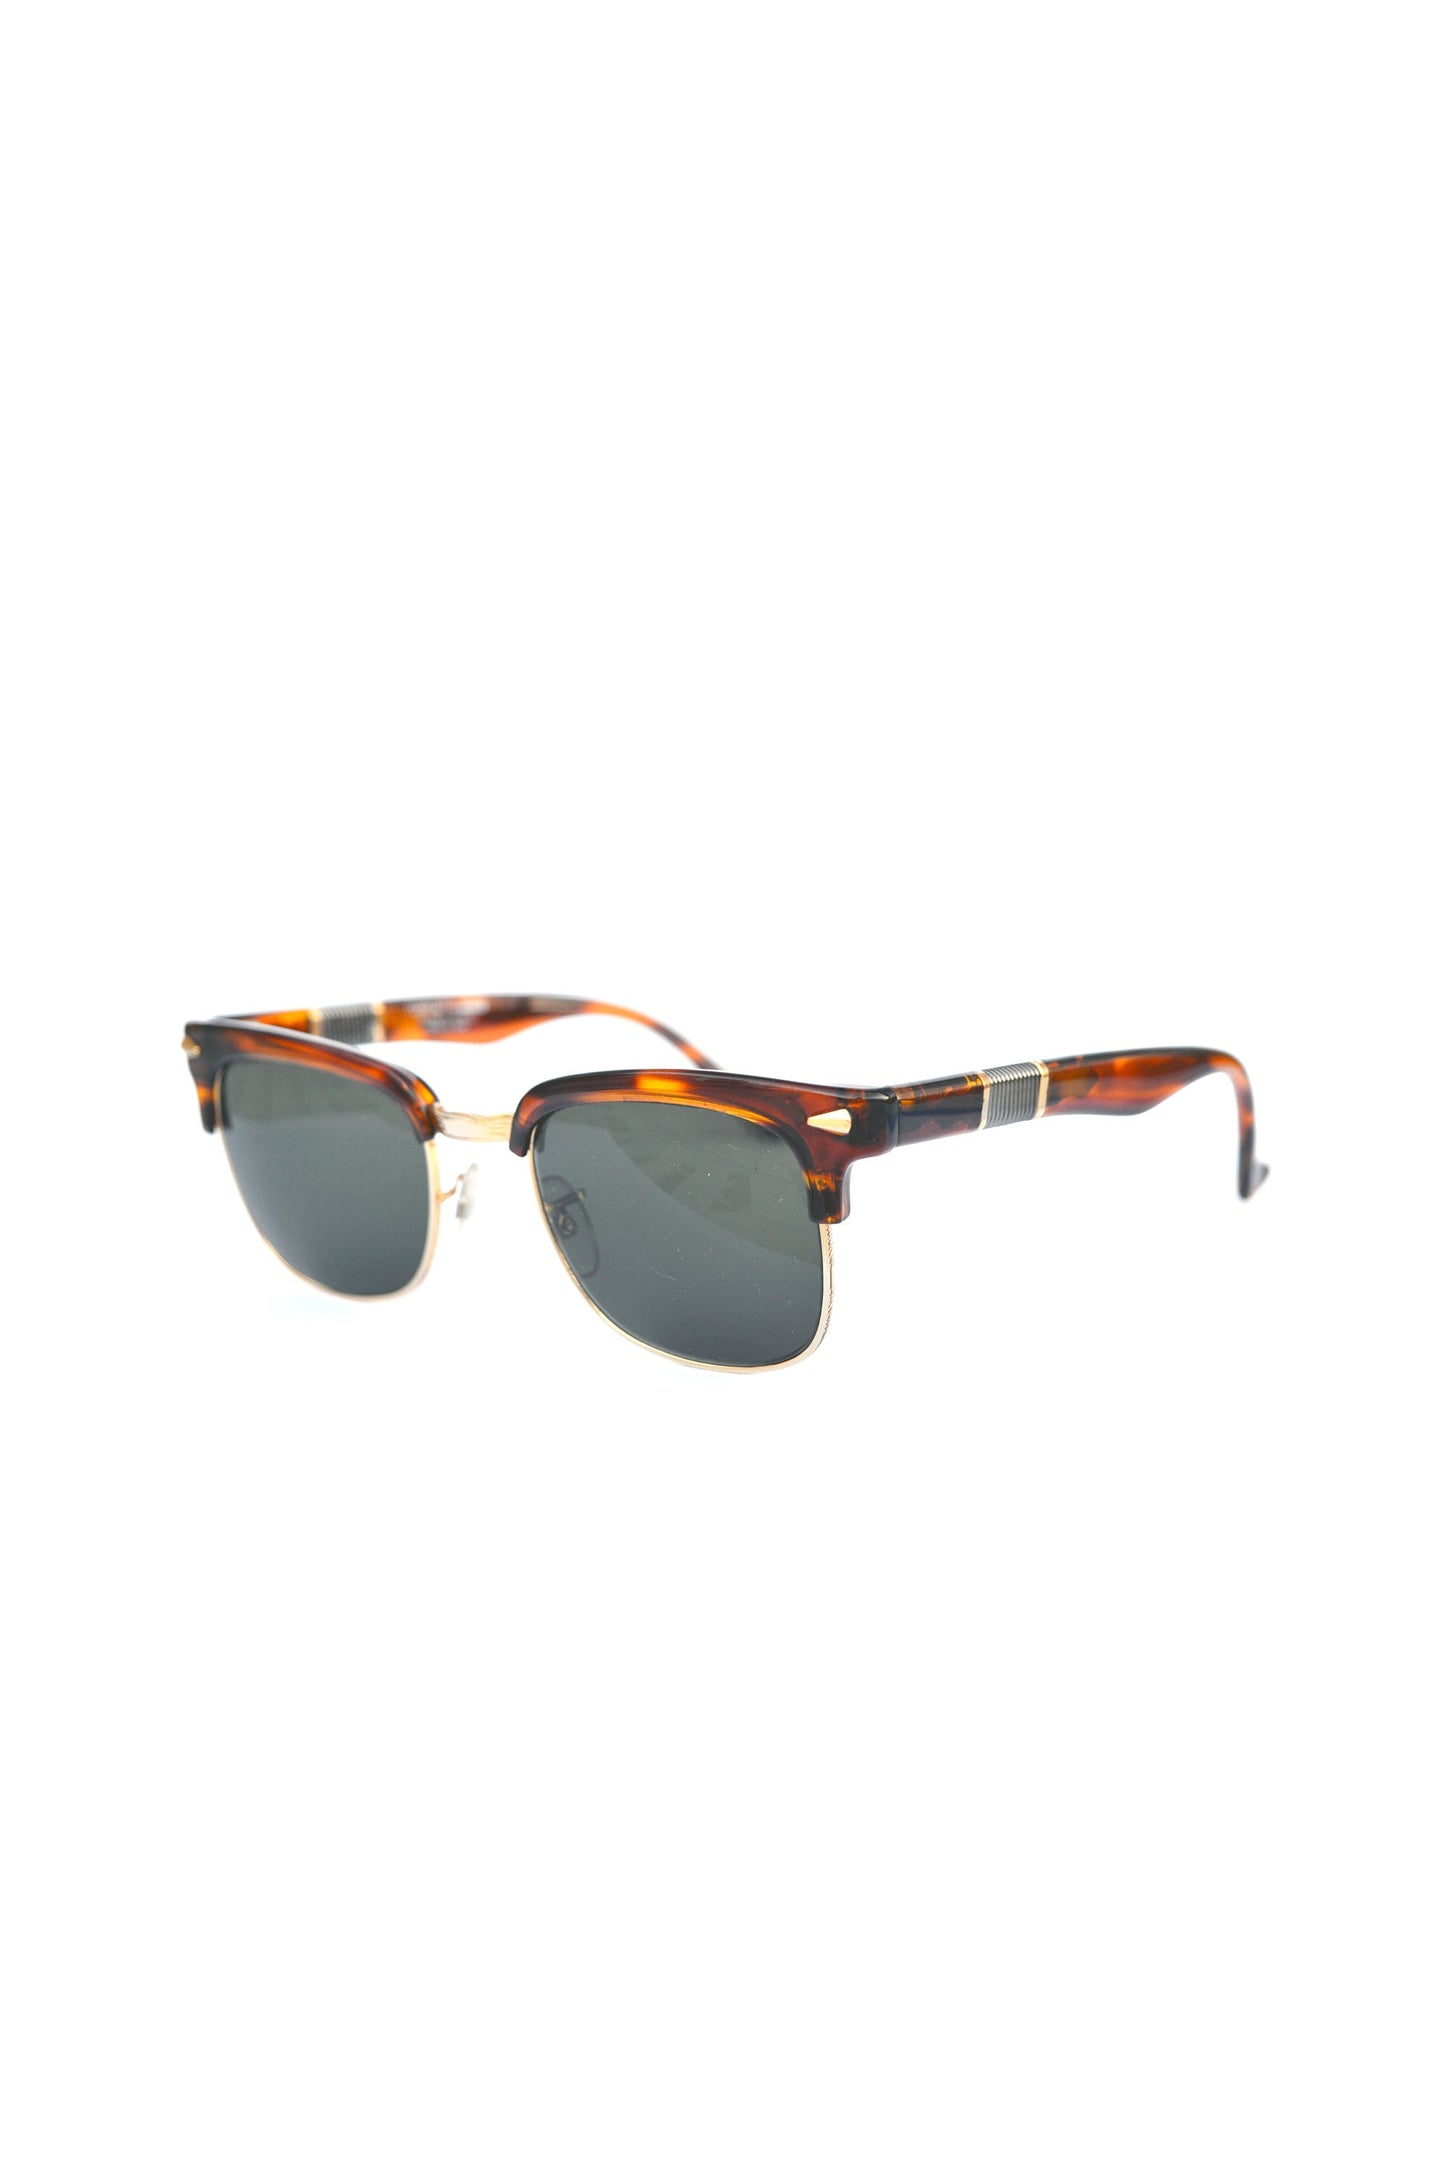 Brown Havana 80s Wayfarer Vintage Sunglasses. Mirage Comfort Italy. Refurbished. New Old Stock sunglasses. Never worn